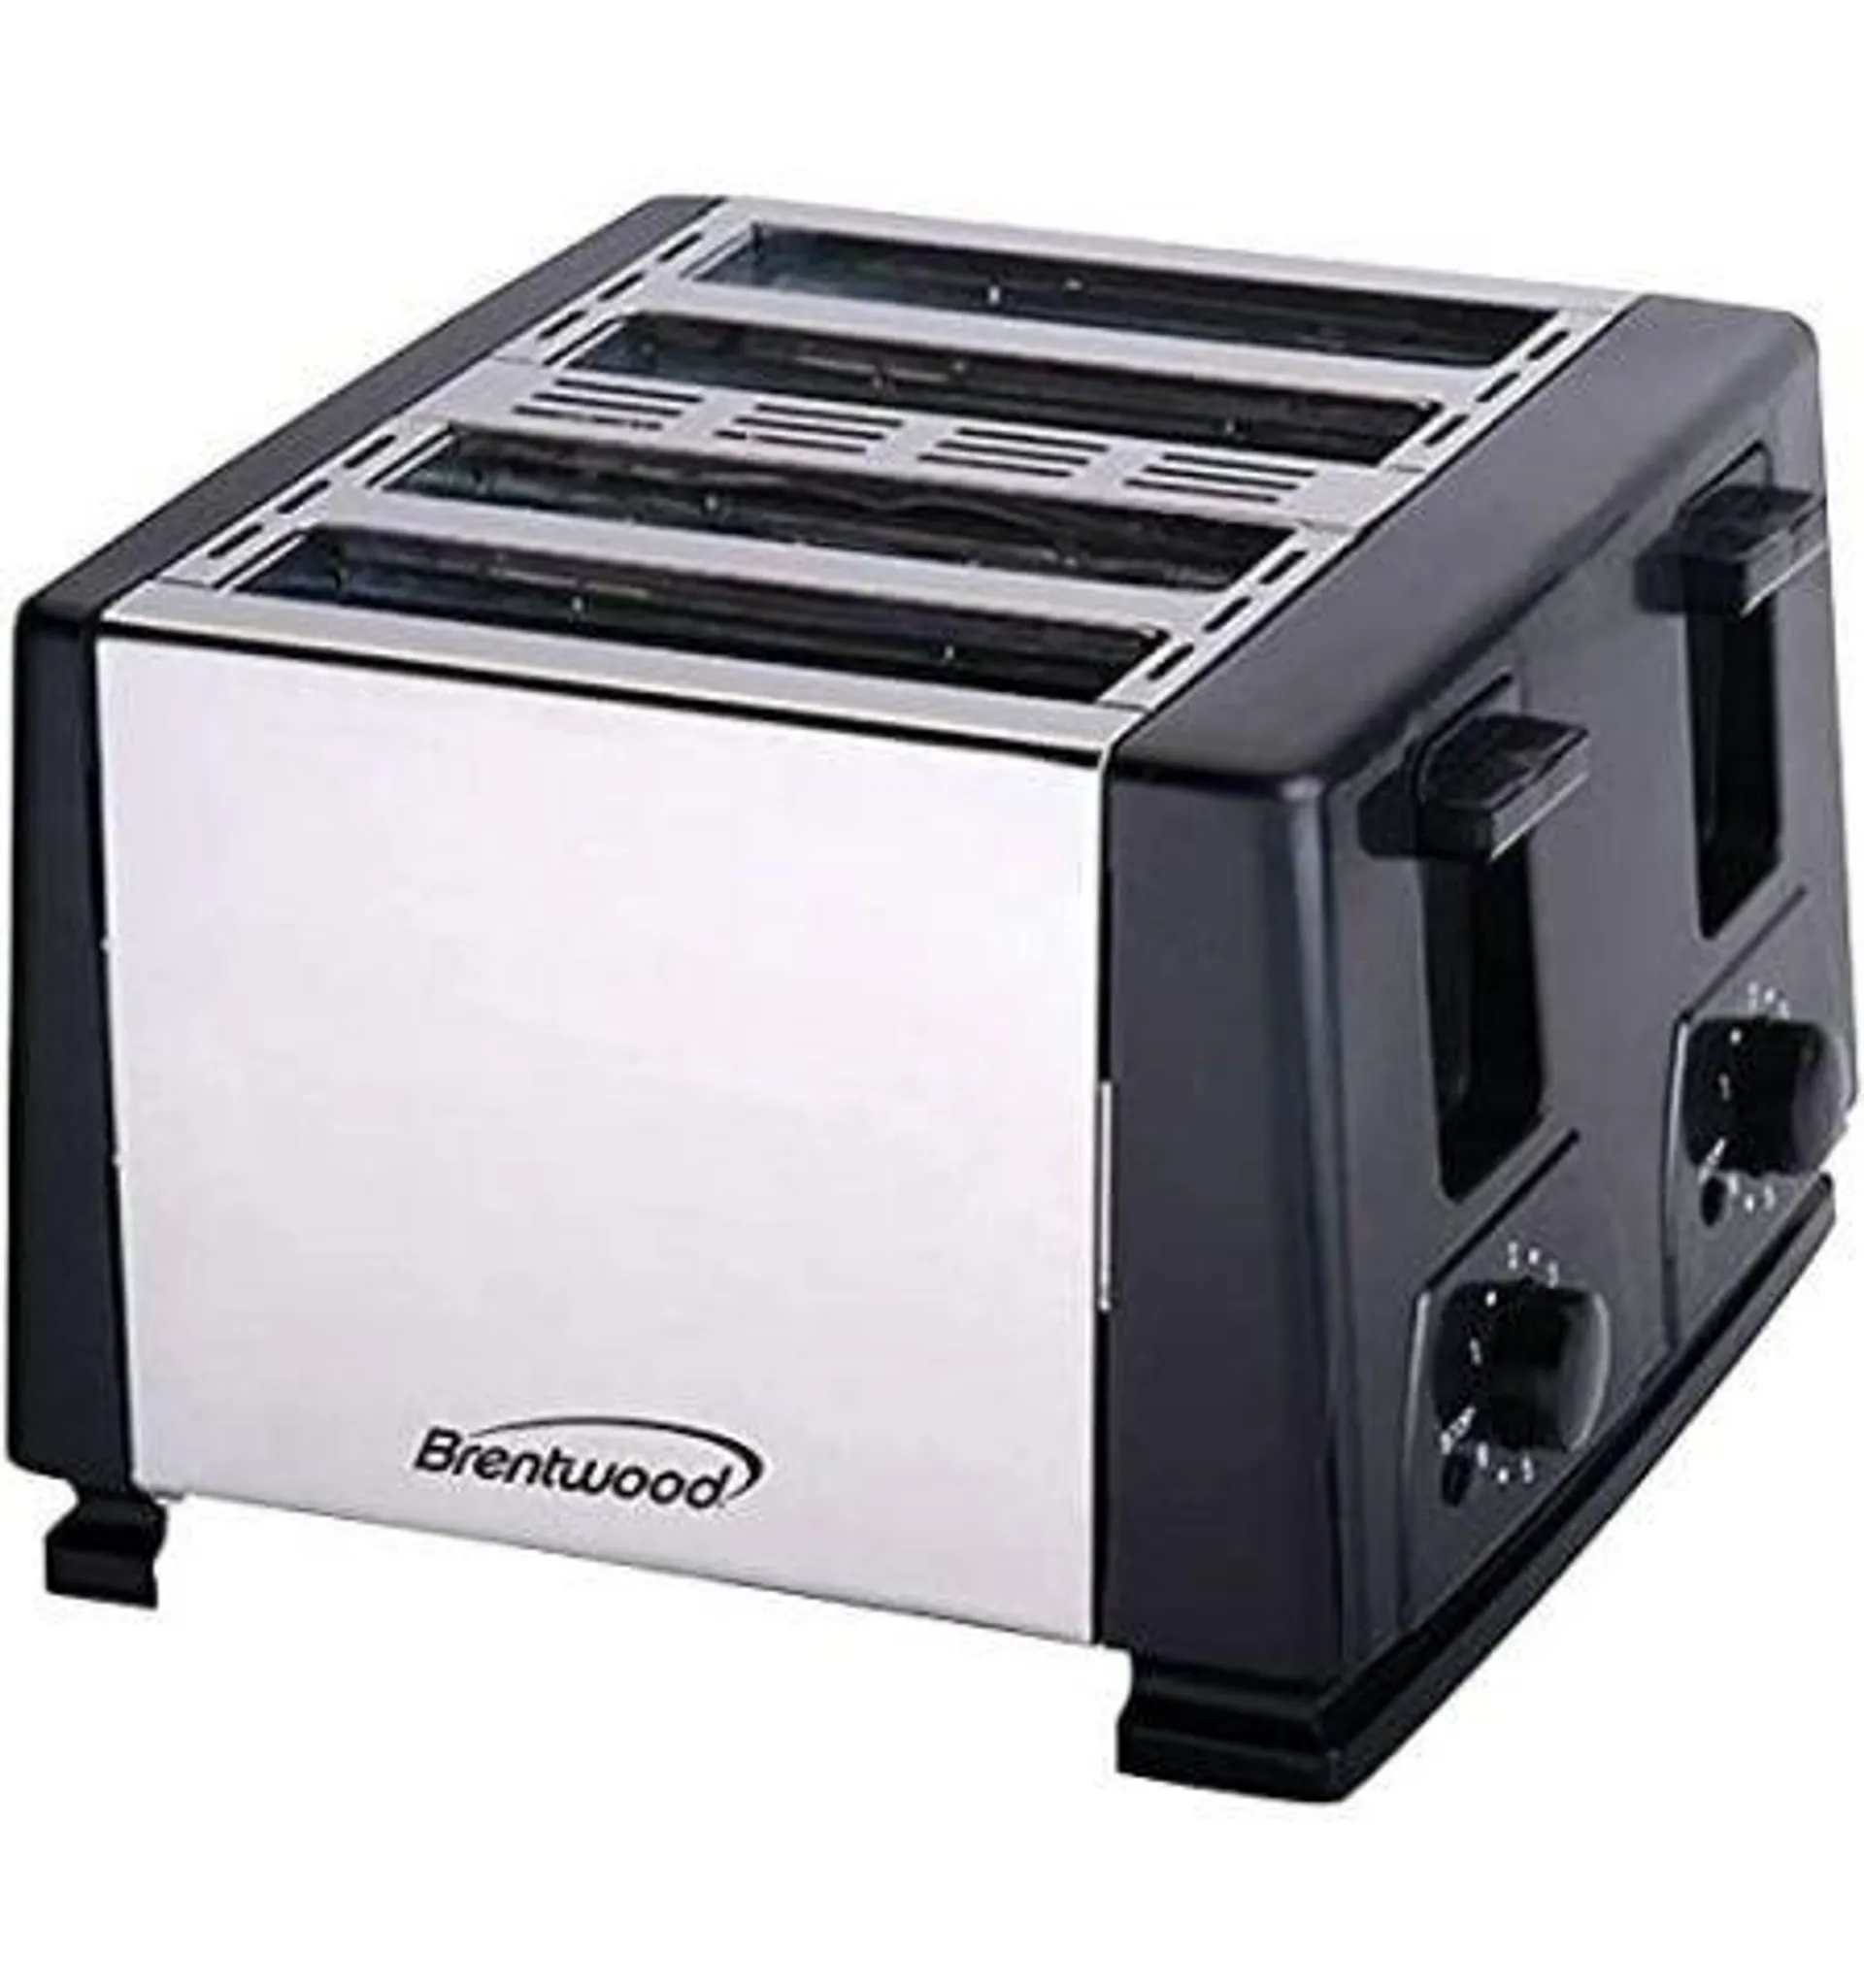 Brentwood 4 Slice Toaster